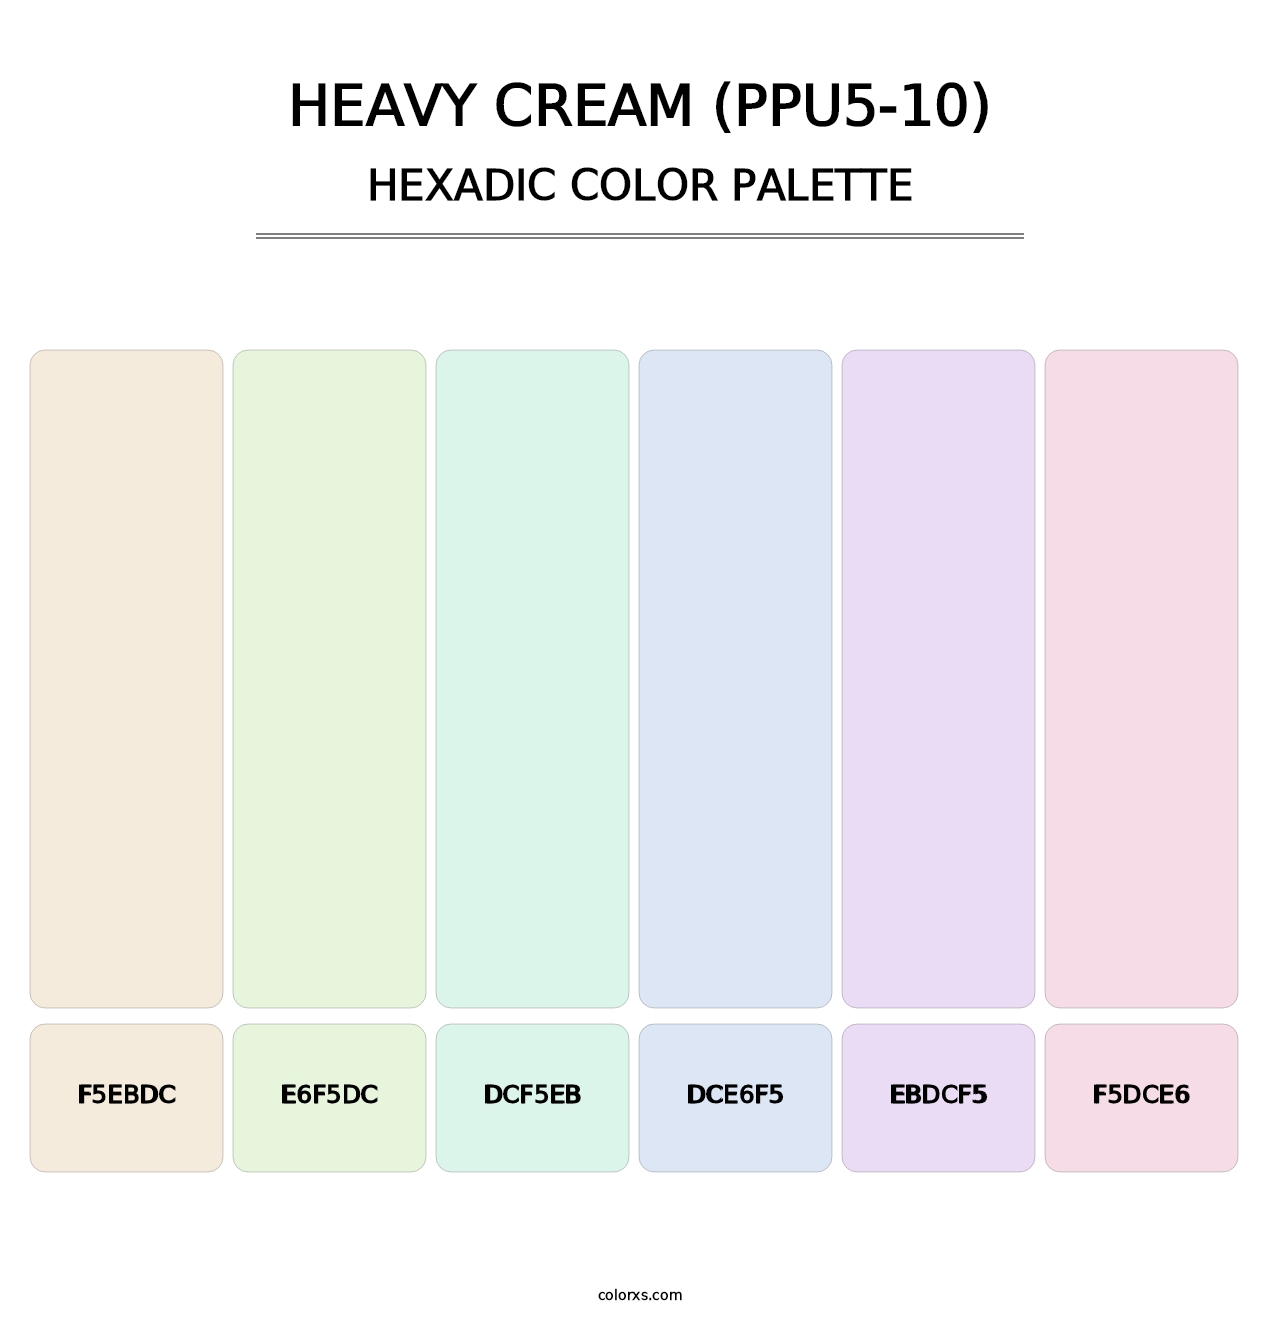 Heavy Cream (PPU5-10) - Hexadic Color Palette